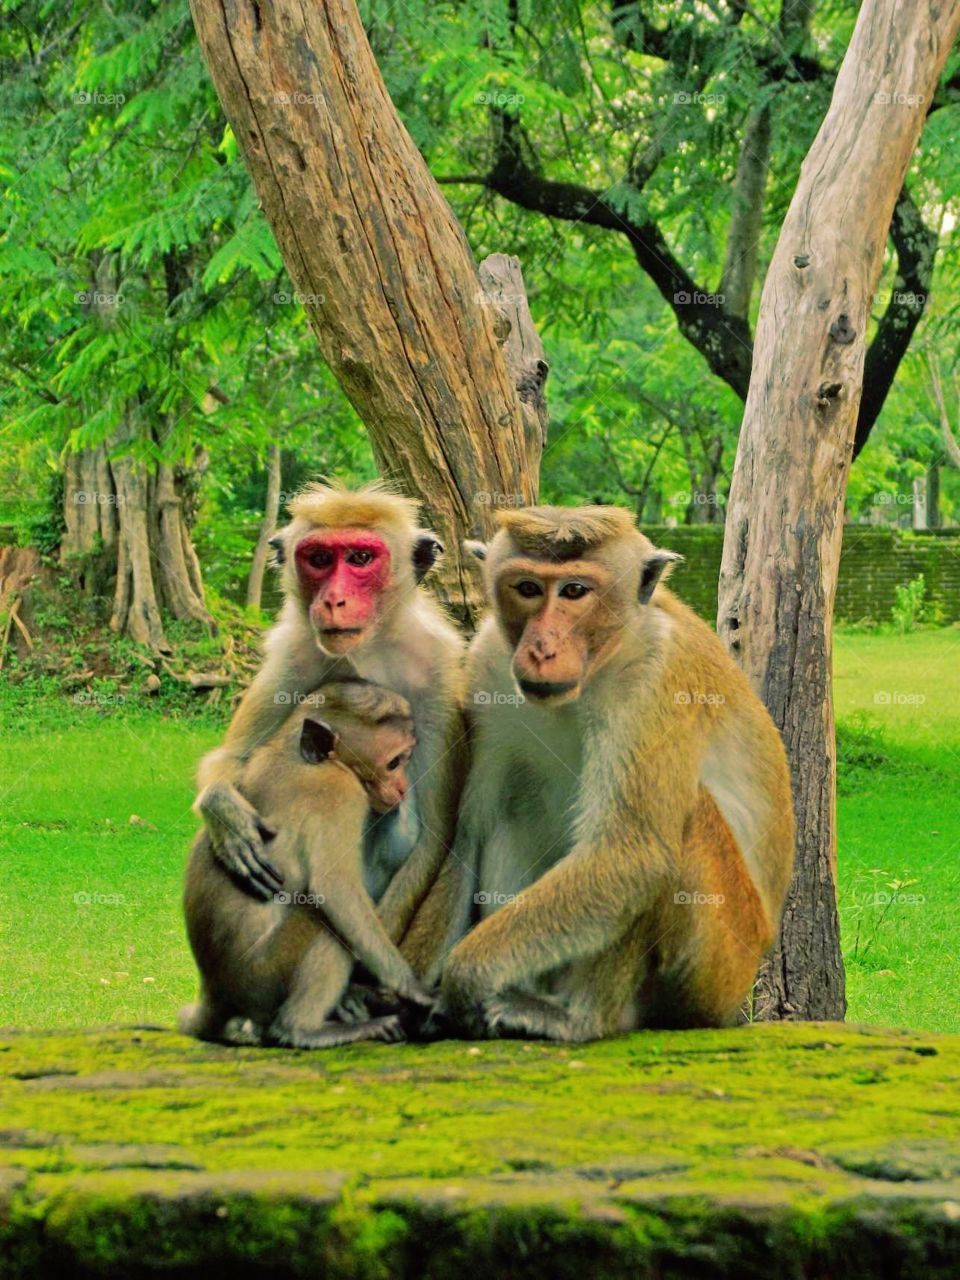 The Monkey Family.